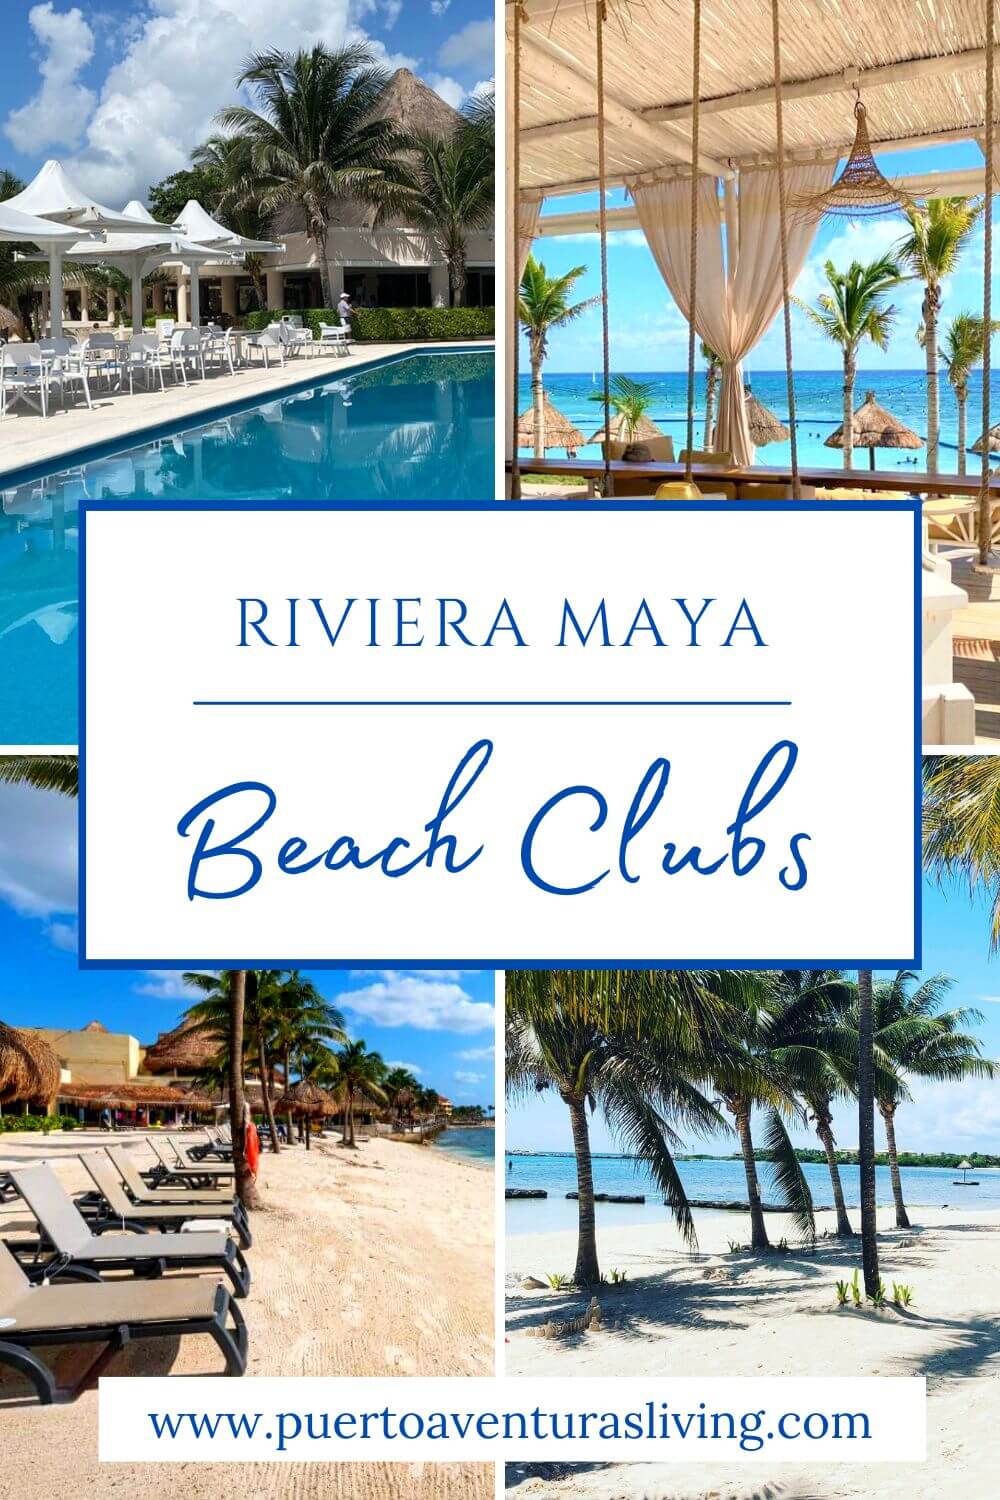 4 Beach clubs in the Riviera Maya